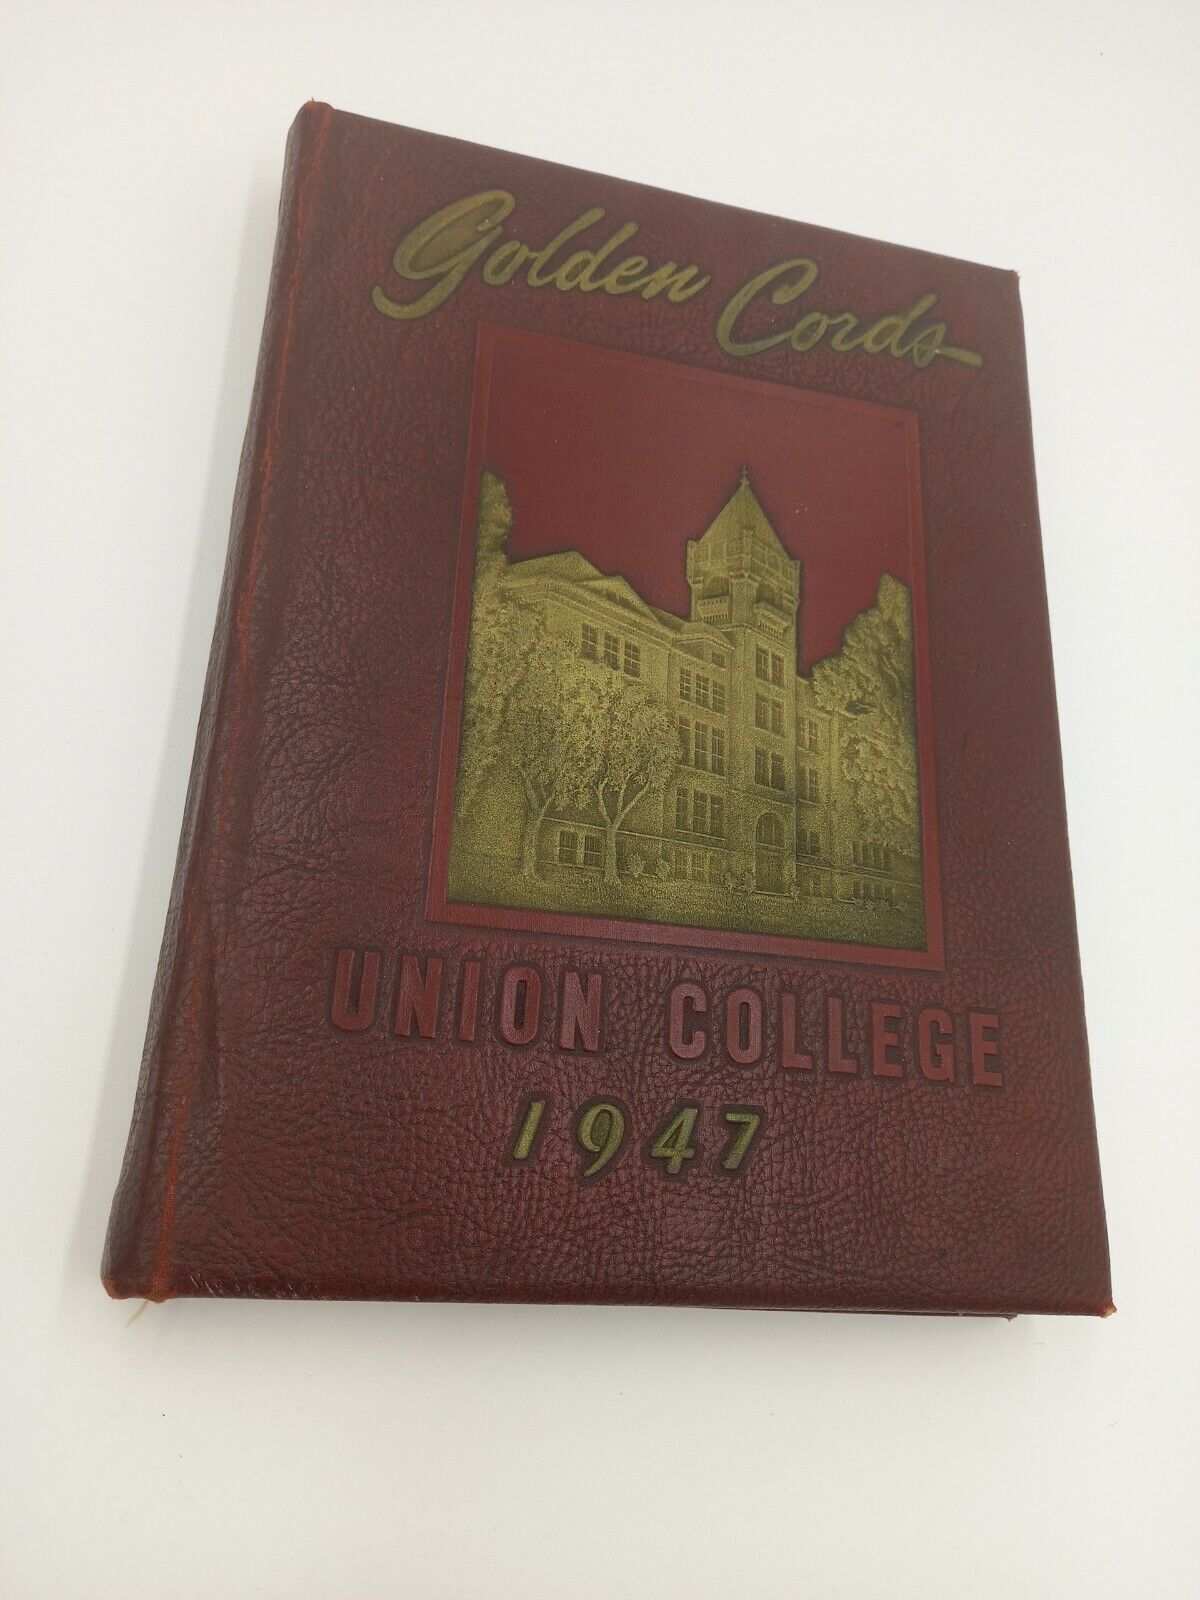 1947 UNION COLLEGE YEARBOOK  GOLDEN CORDS  LINCOLN NEBRASKA